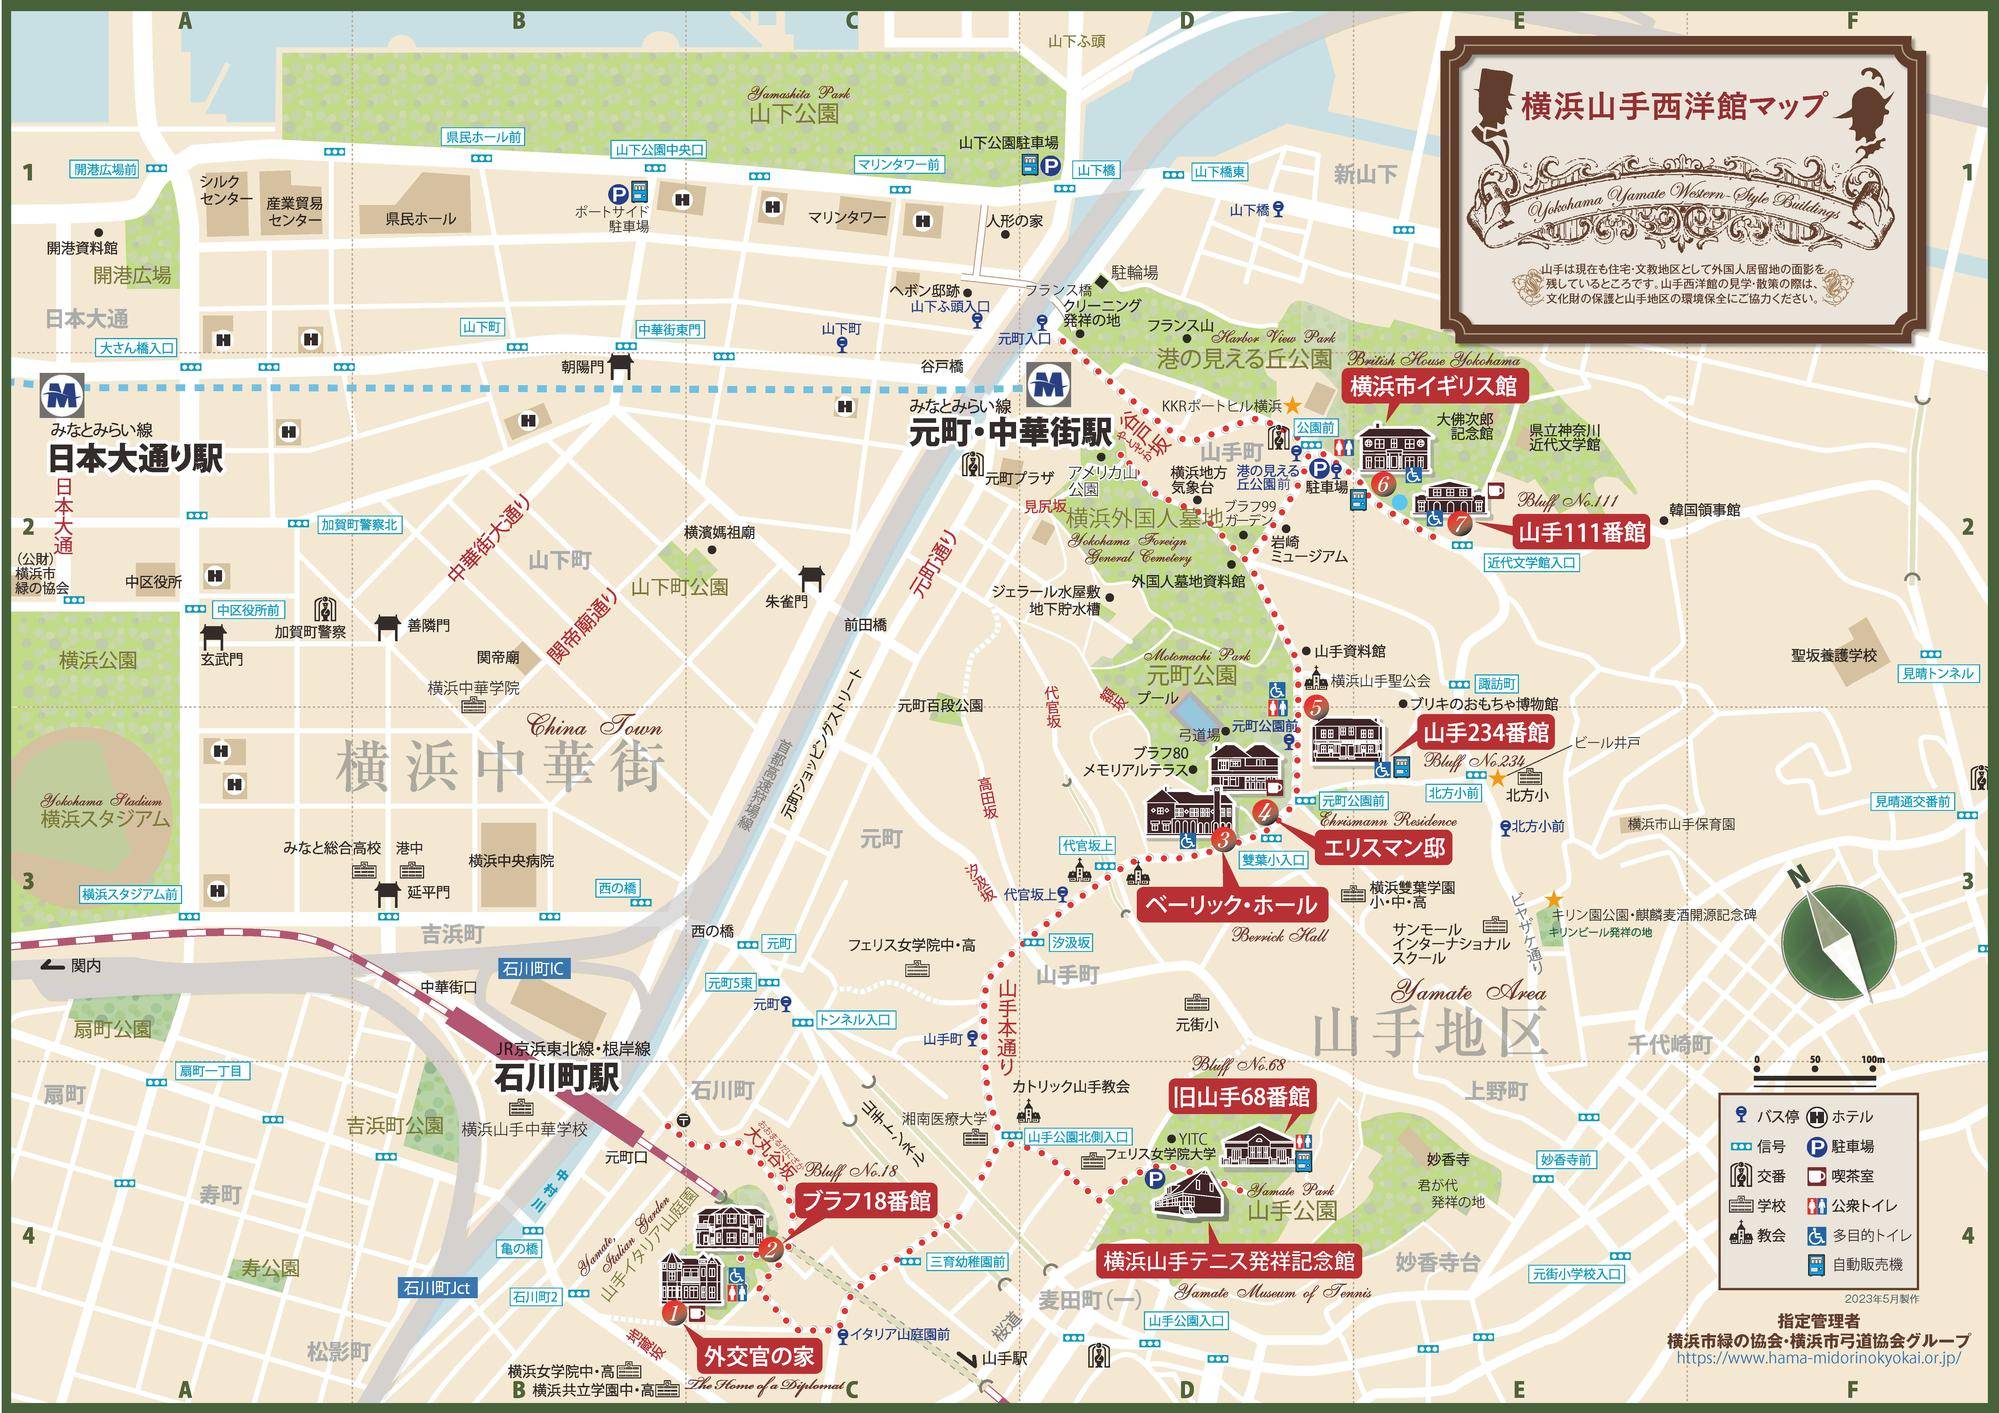 日本語（Japanese）西洋館MAP.jpg